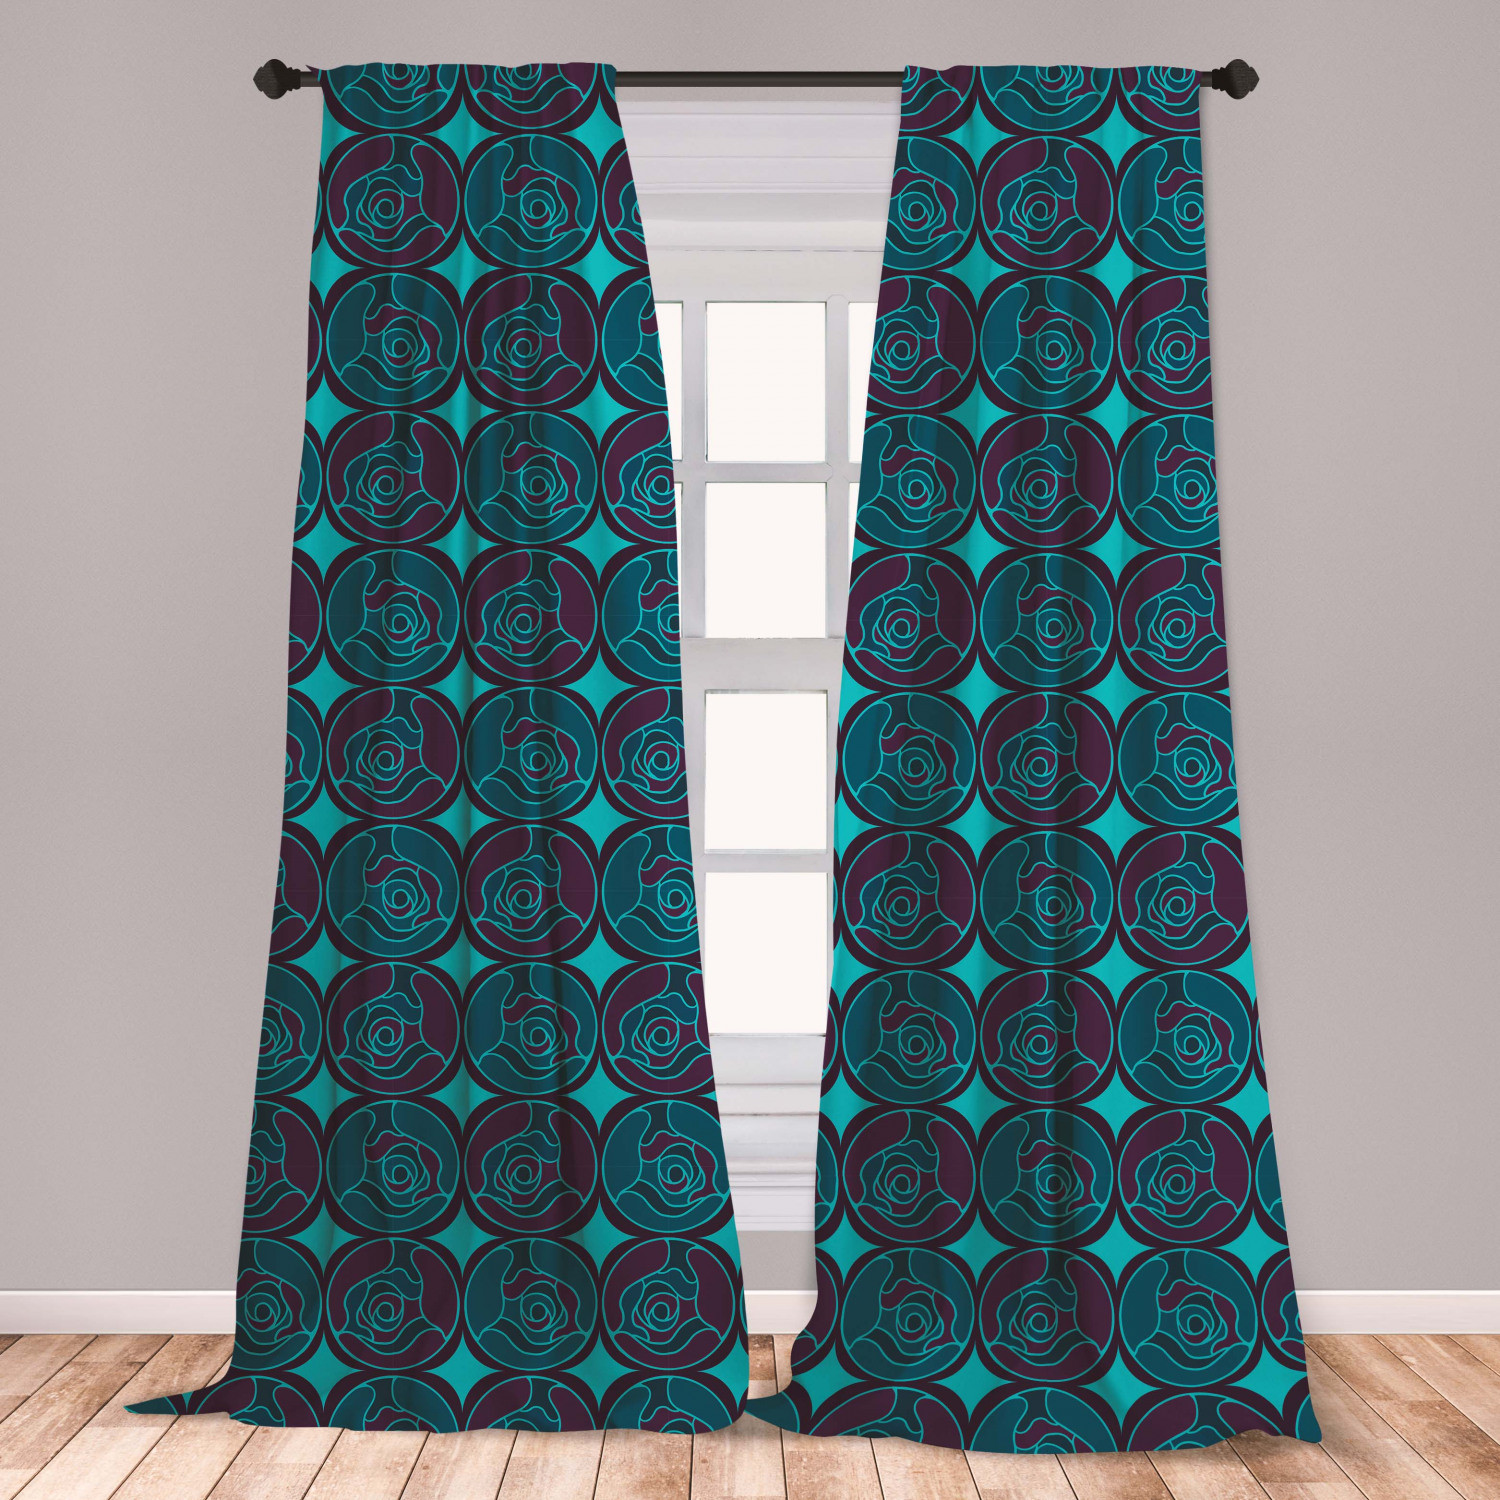 Ebay Curtains For Living Room
 Flora Scene Microfiber Curtains 2 Panel Set Living Room